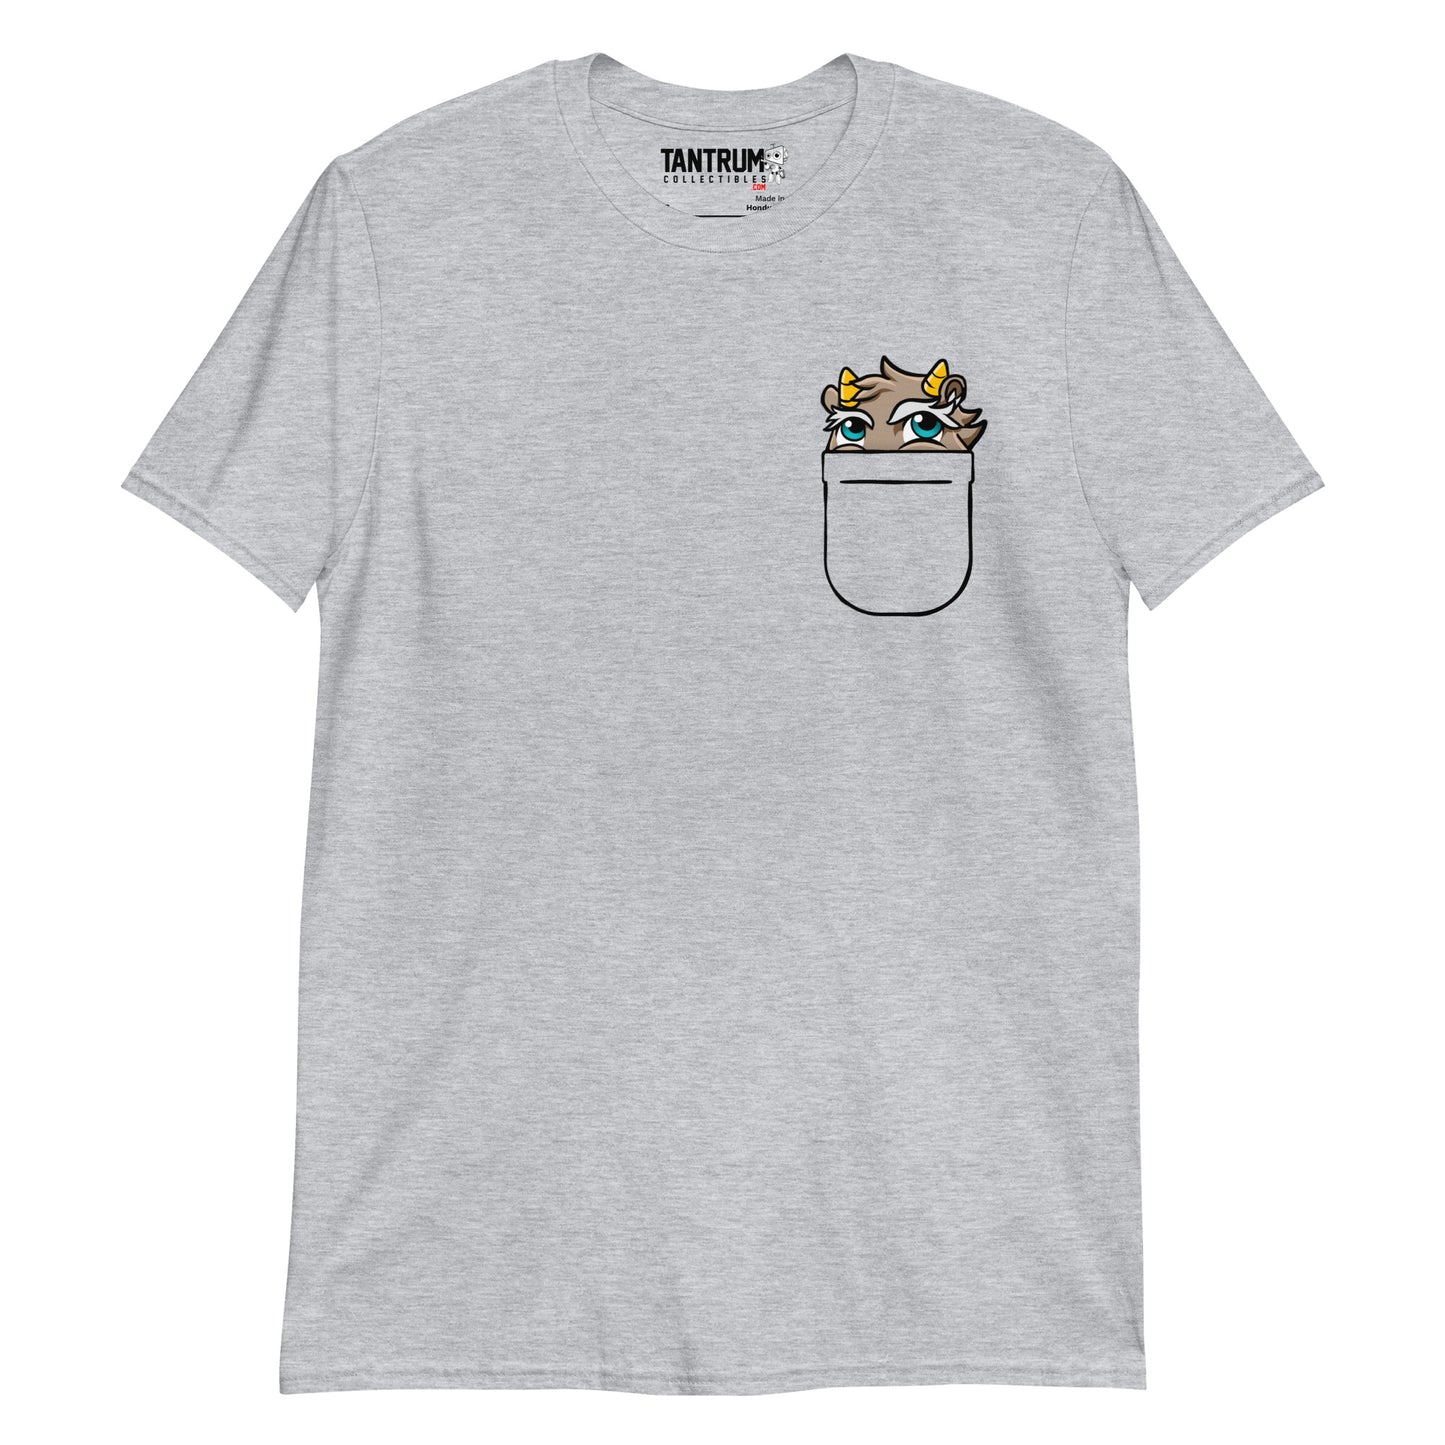 Cliffy - Unisex T-Shirt - Printed Pocket Lurk